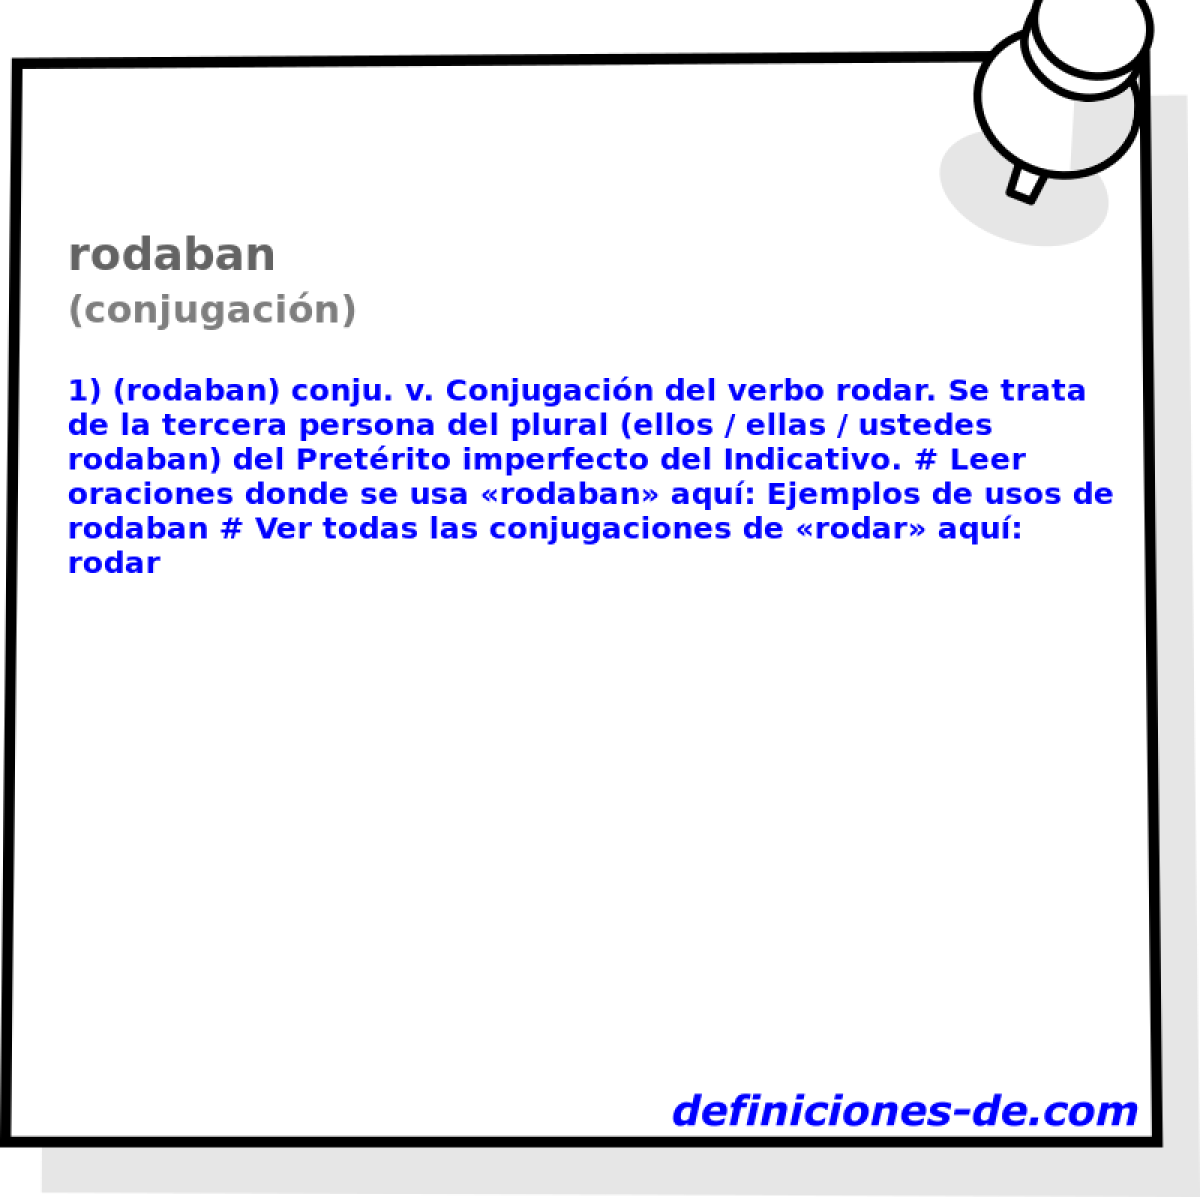 rodaban (conjugacin)